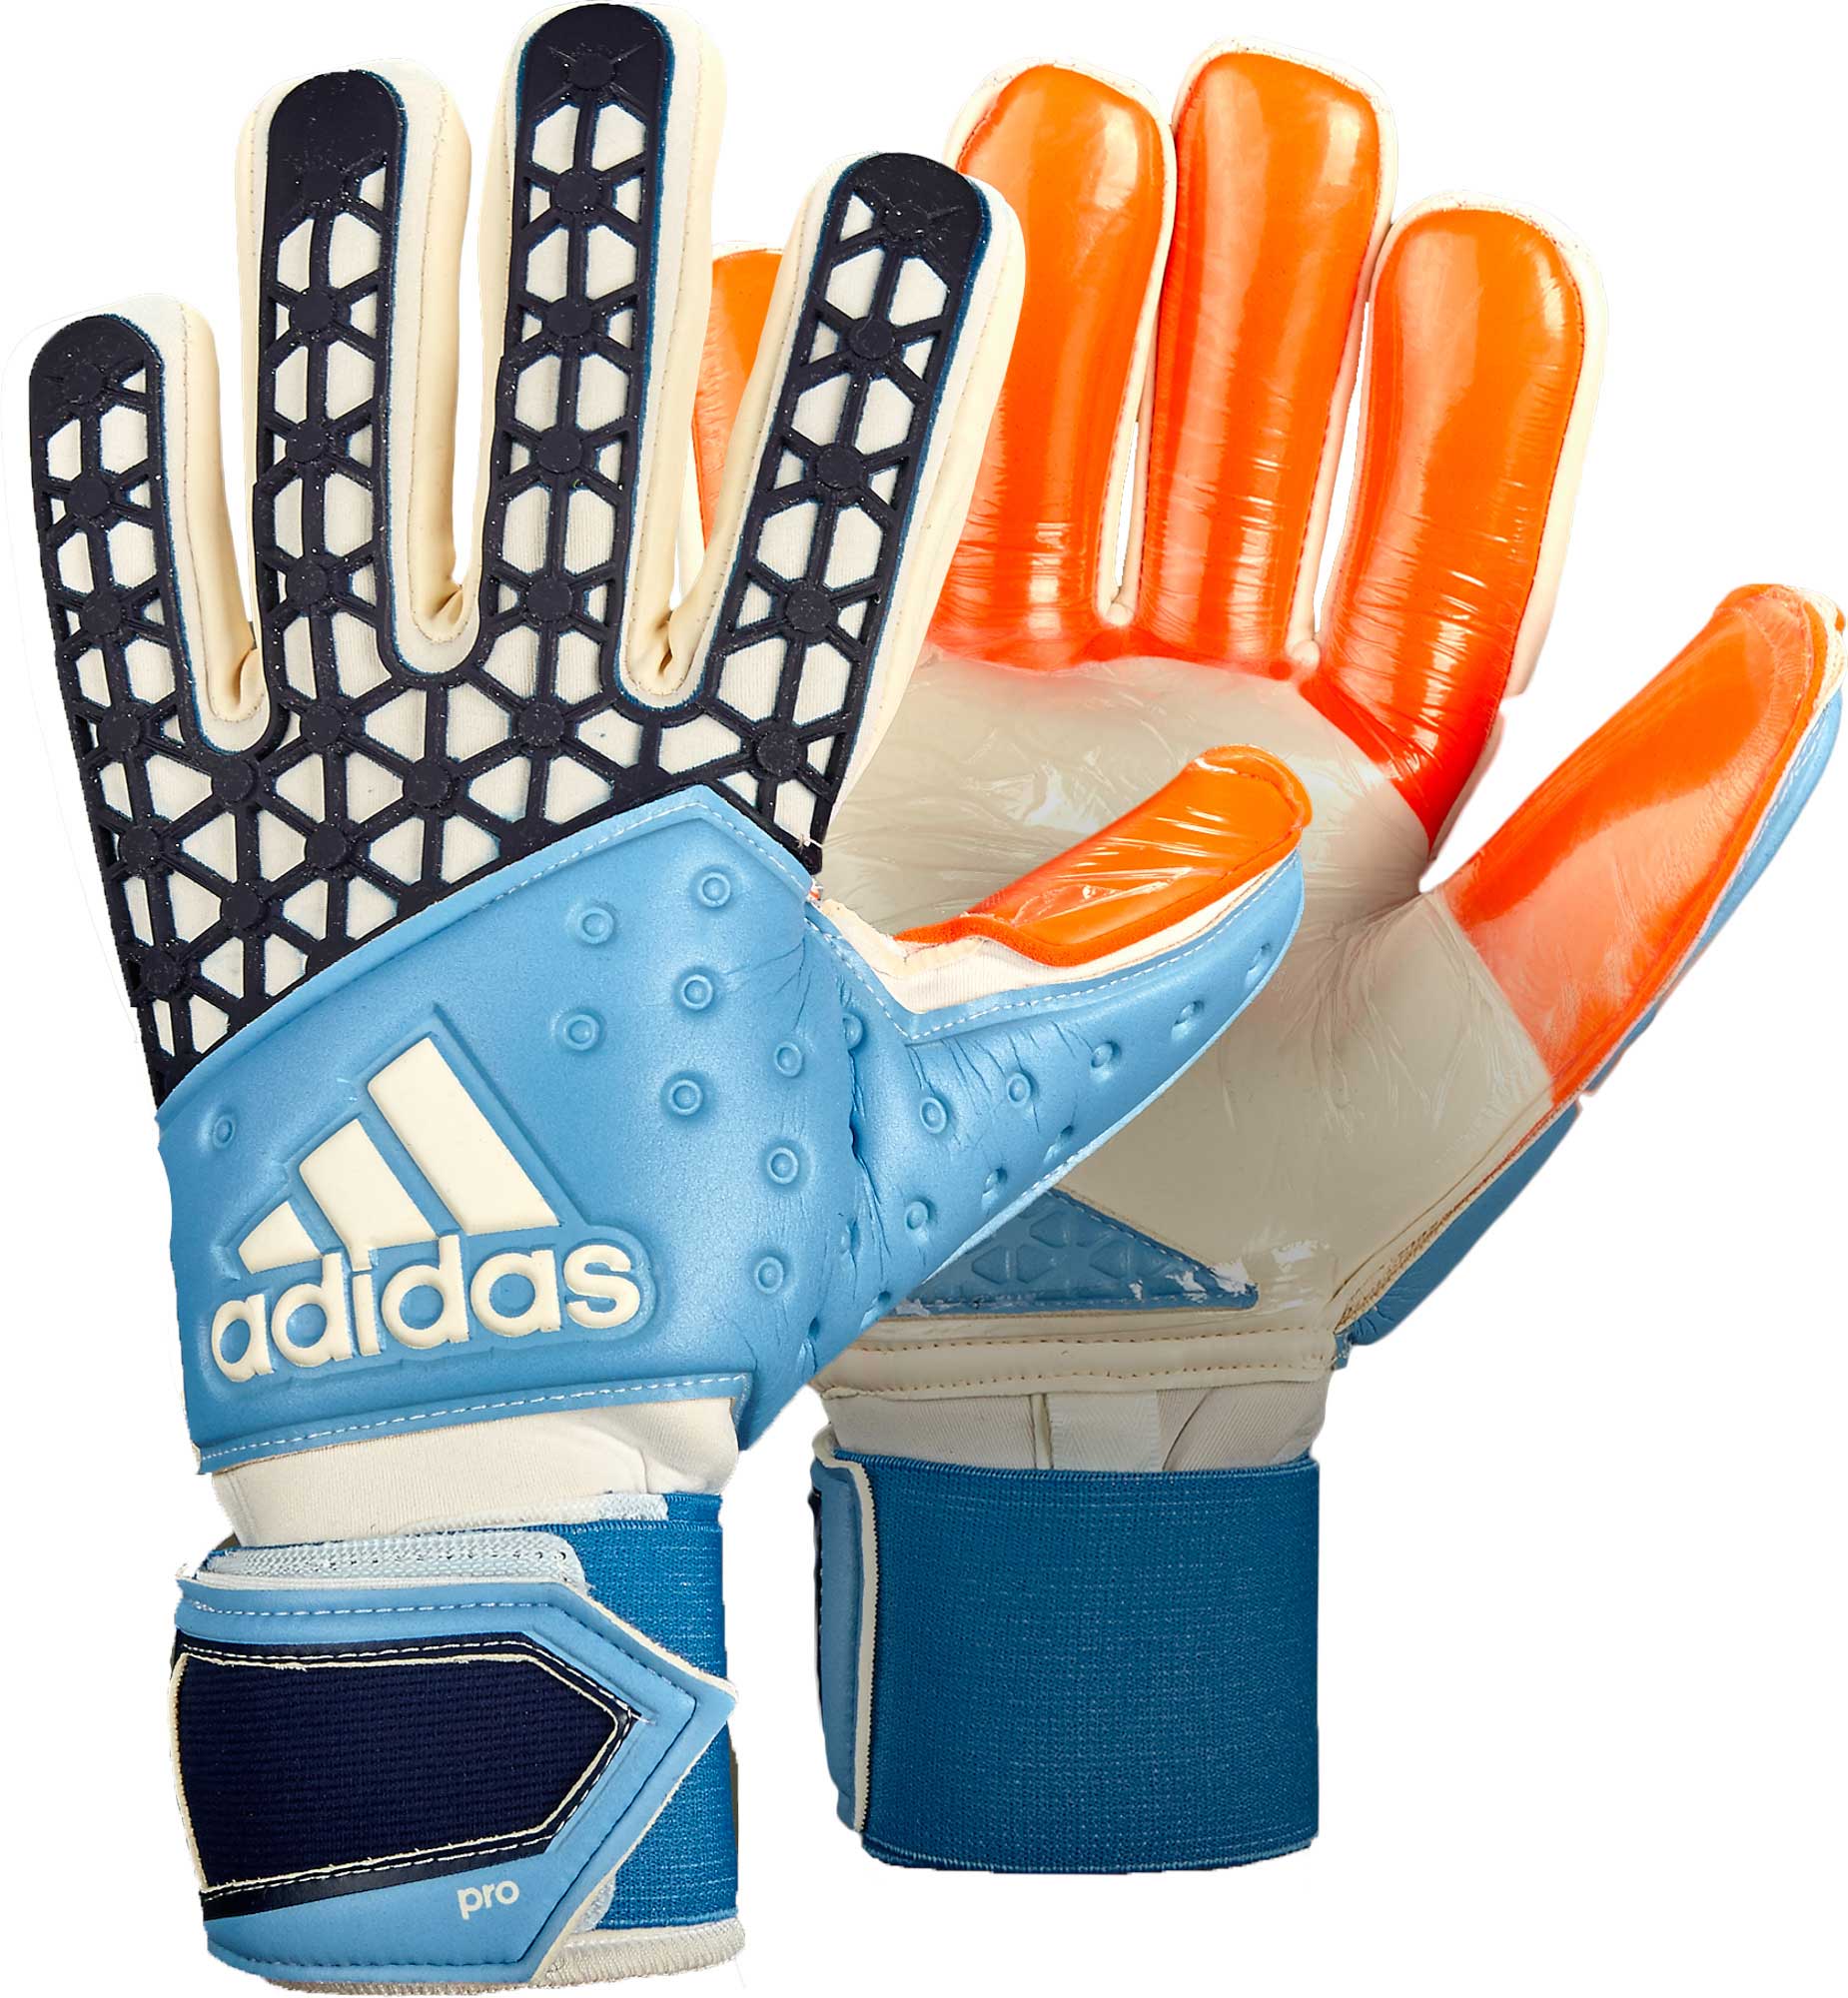 adidas ace zones pro goalkeeper gloves